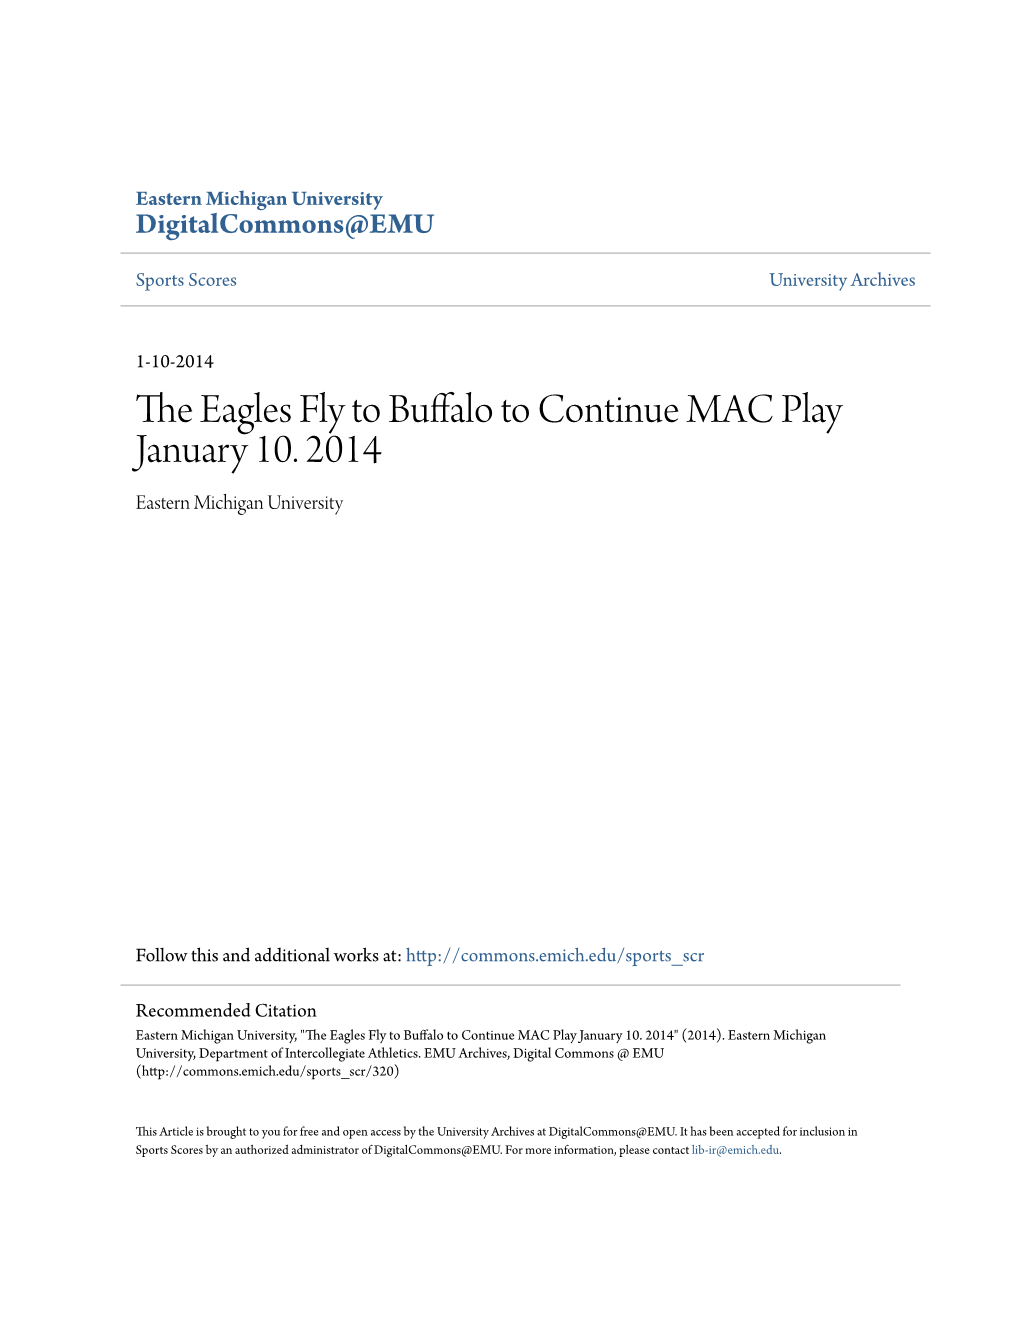 The Eagles Fly to Buffalo to Continue MAC Play January 10. 2014